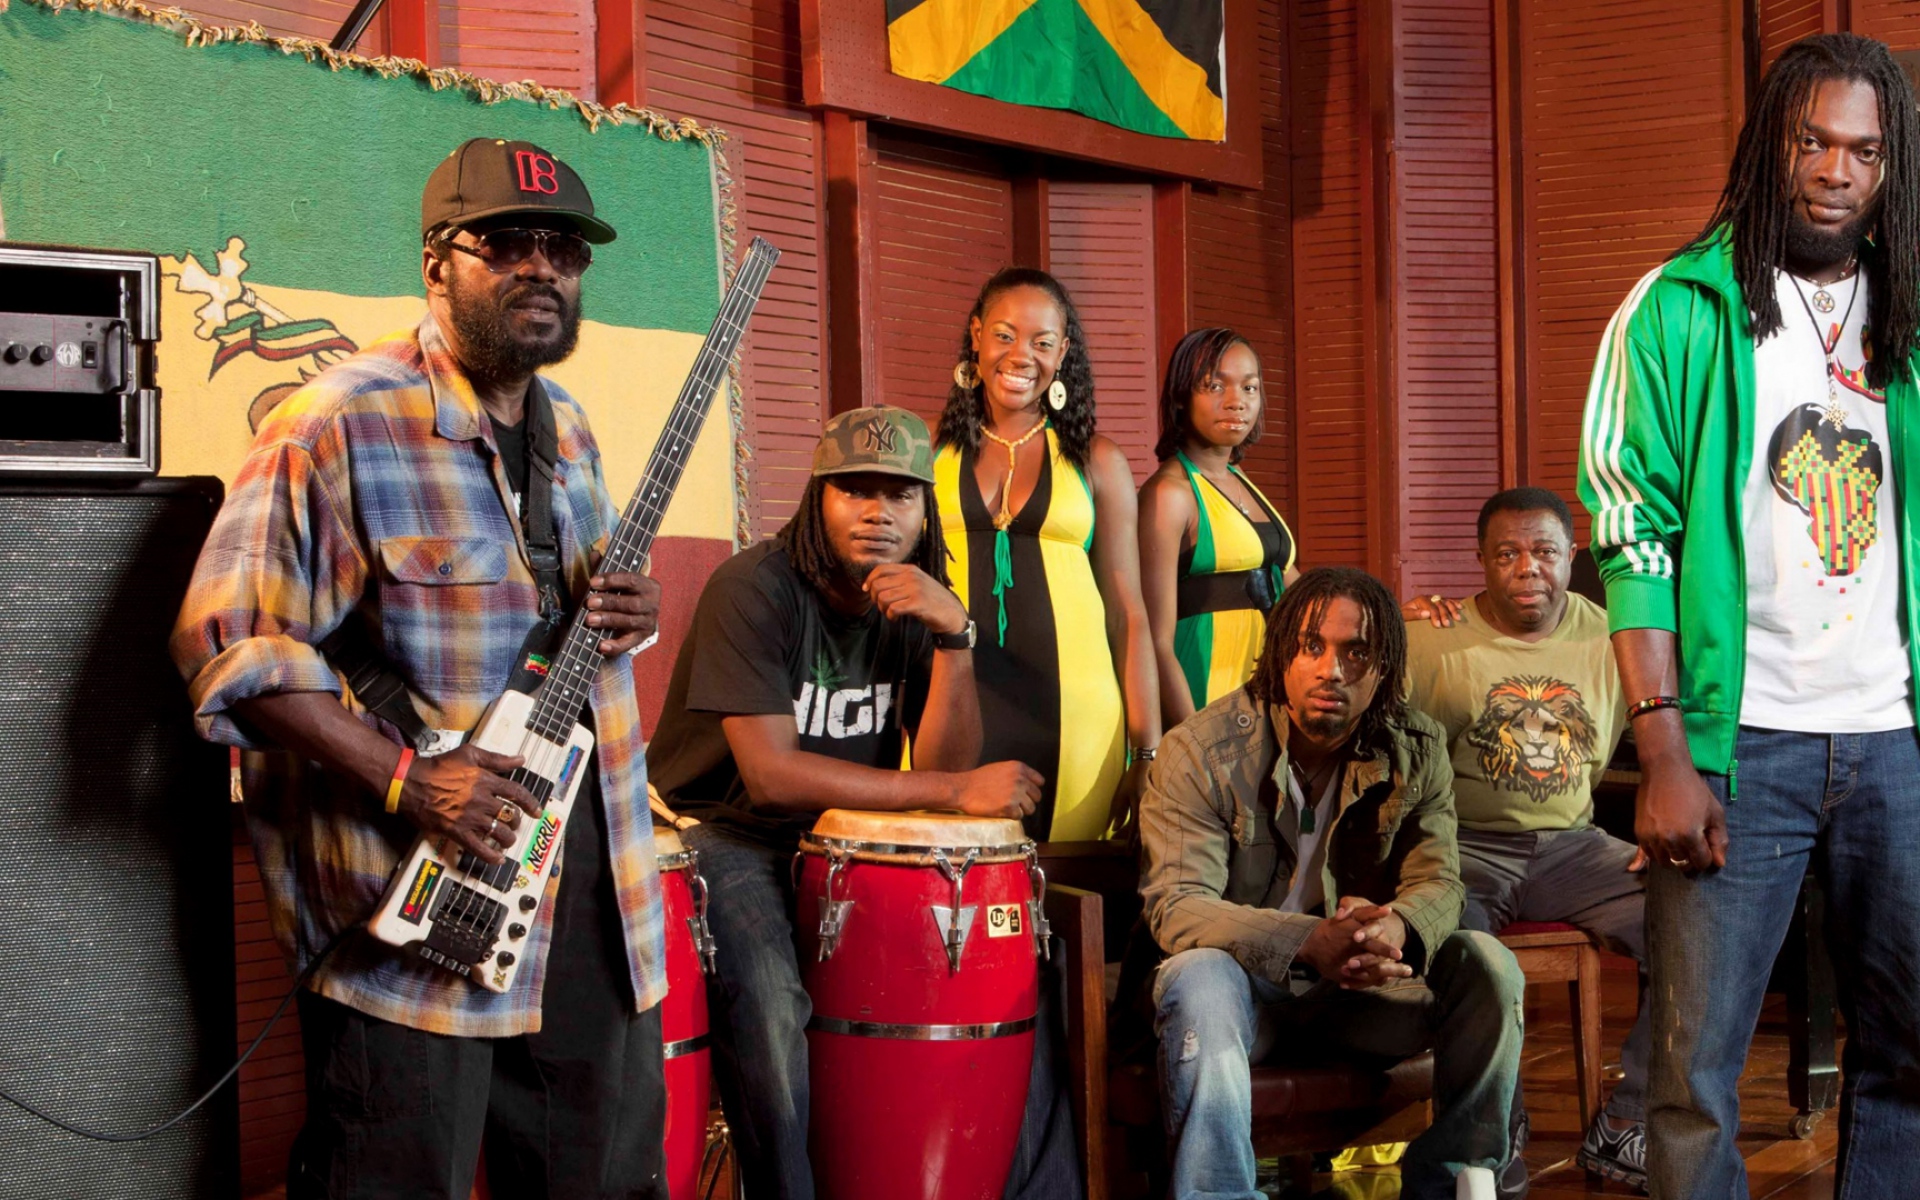 Басс группы. Группа the Wailers. Группа Боба Марли. Ямайские музыканты регги. The Wailers Band Band.